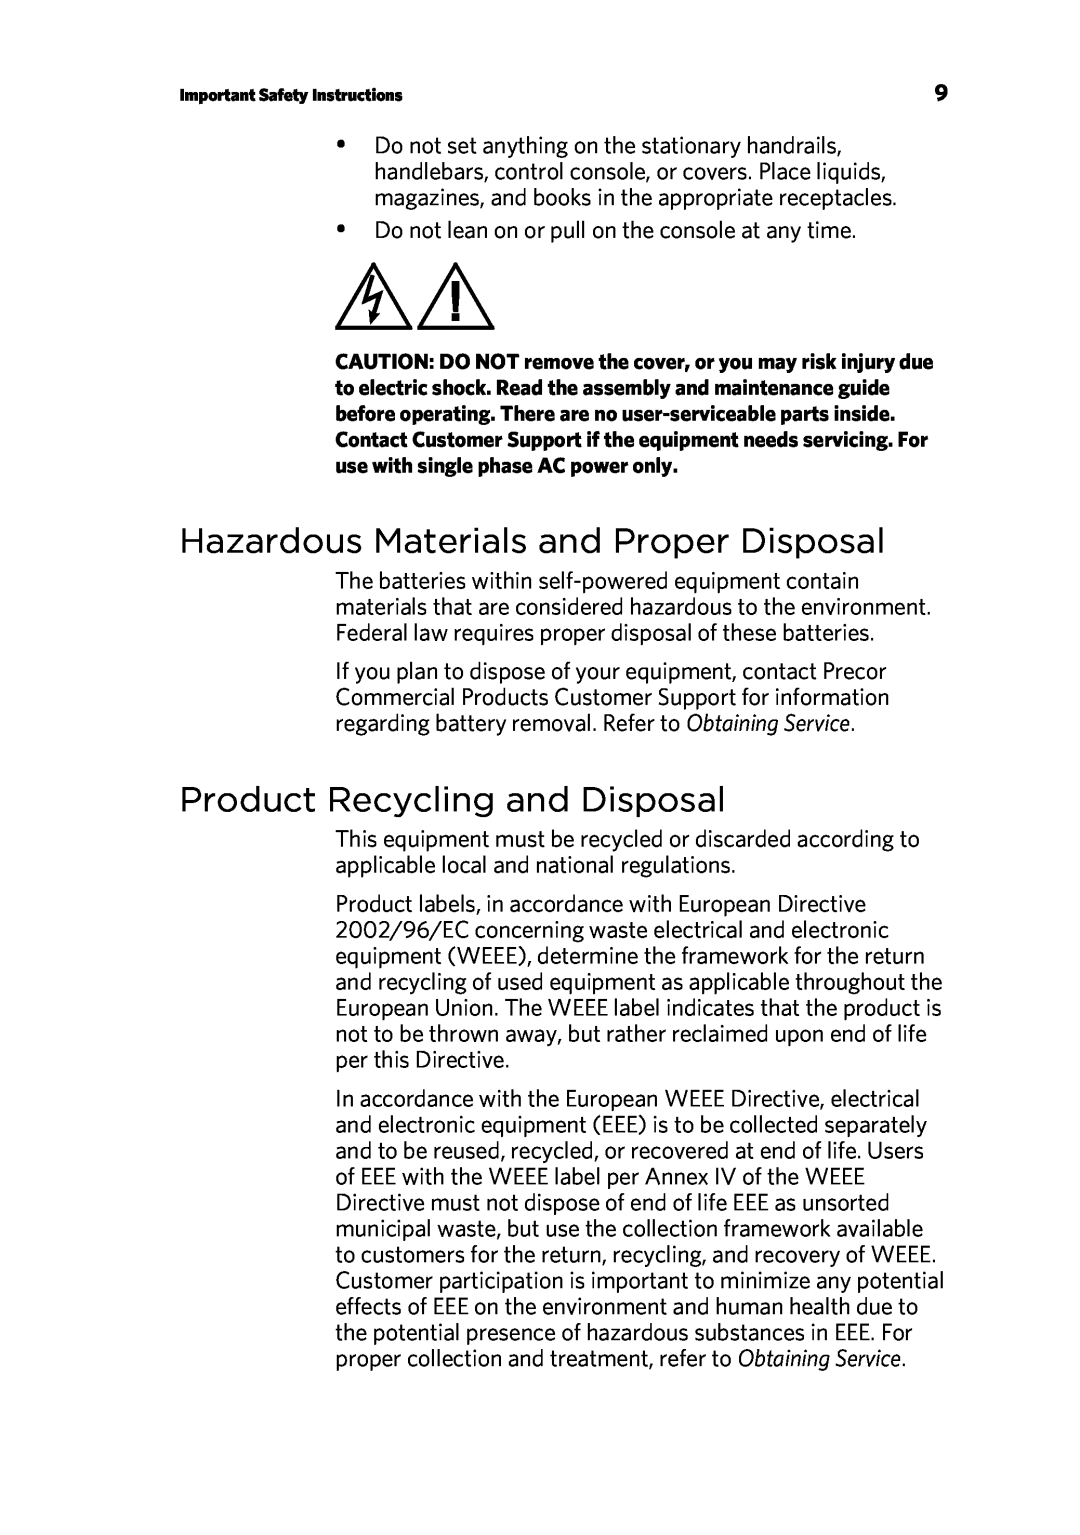 Precor P80 manual Hazardous Materials and Proper Disposal, Product Recycling and Disposal 